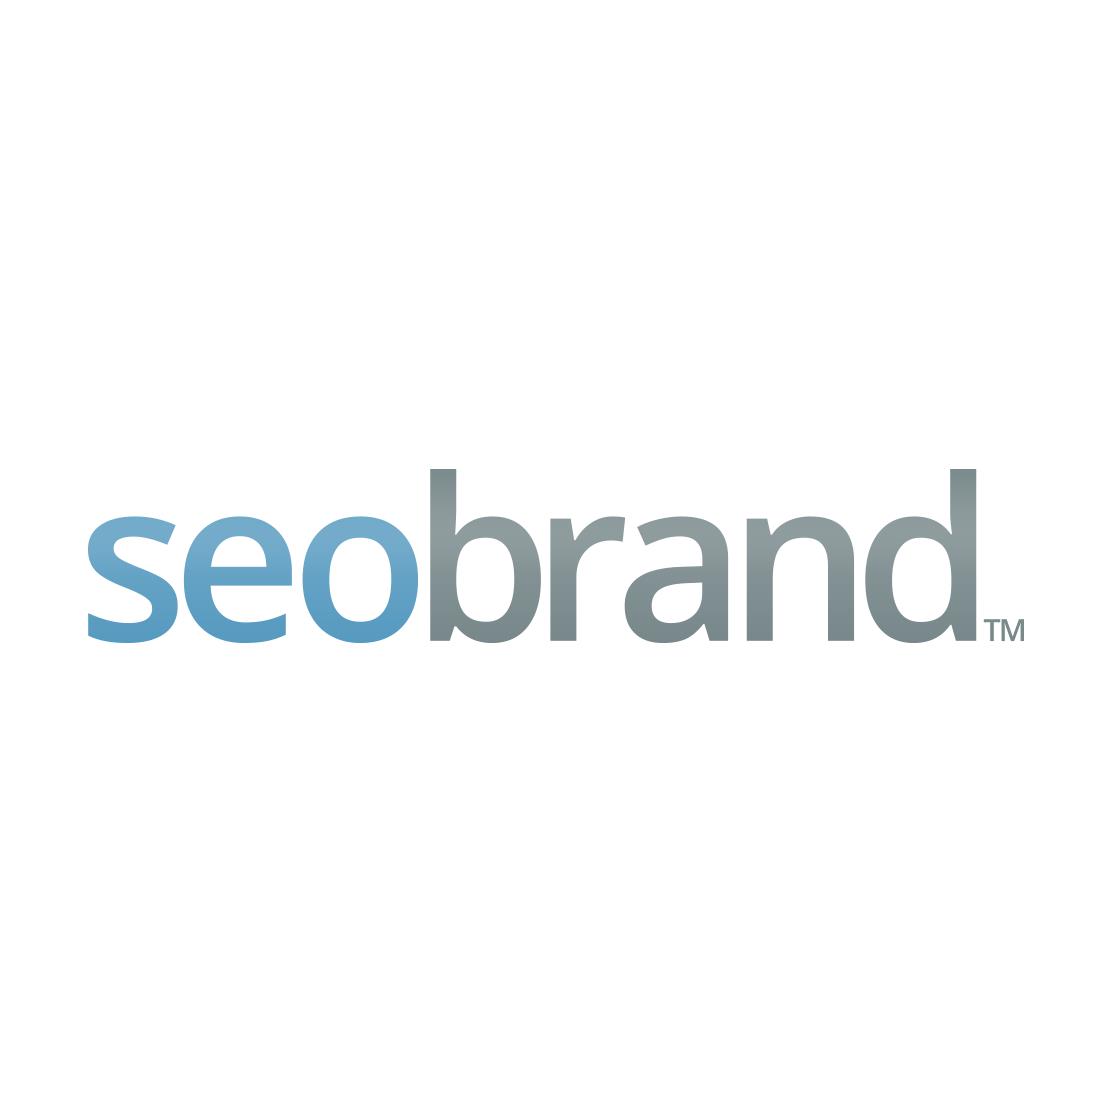 Top NYC SEO Company Logo: SEO Brand